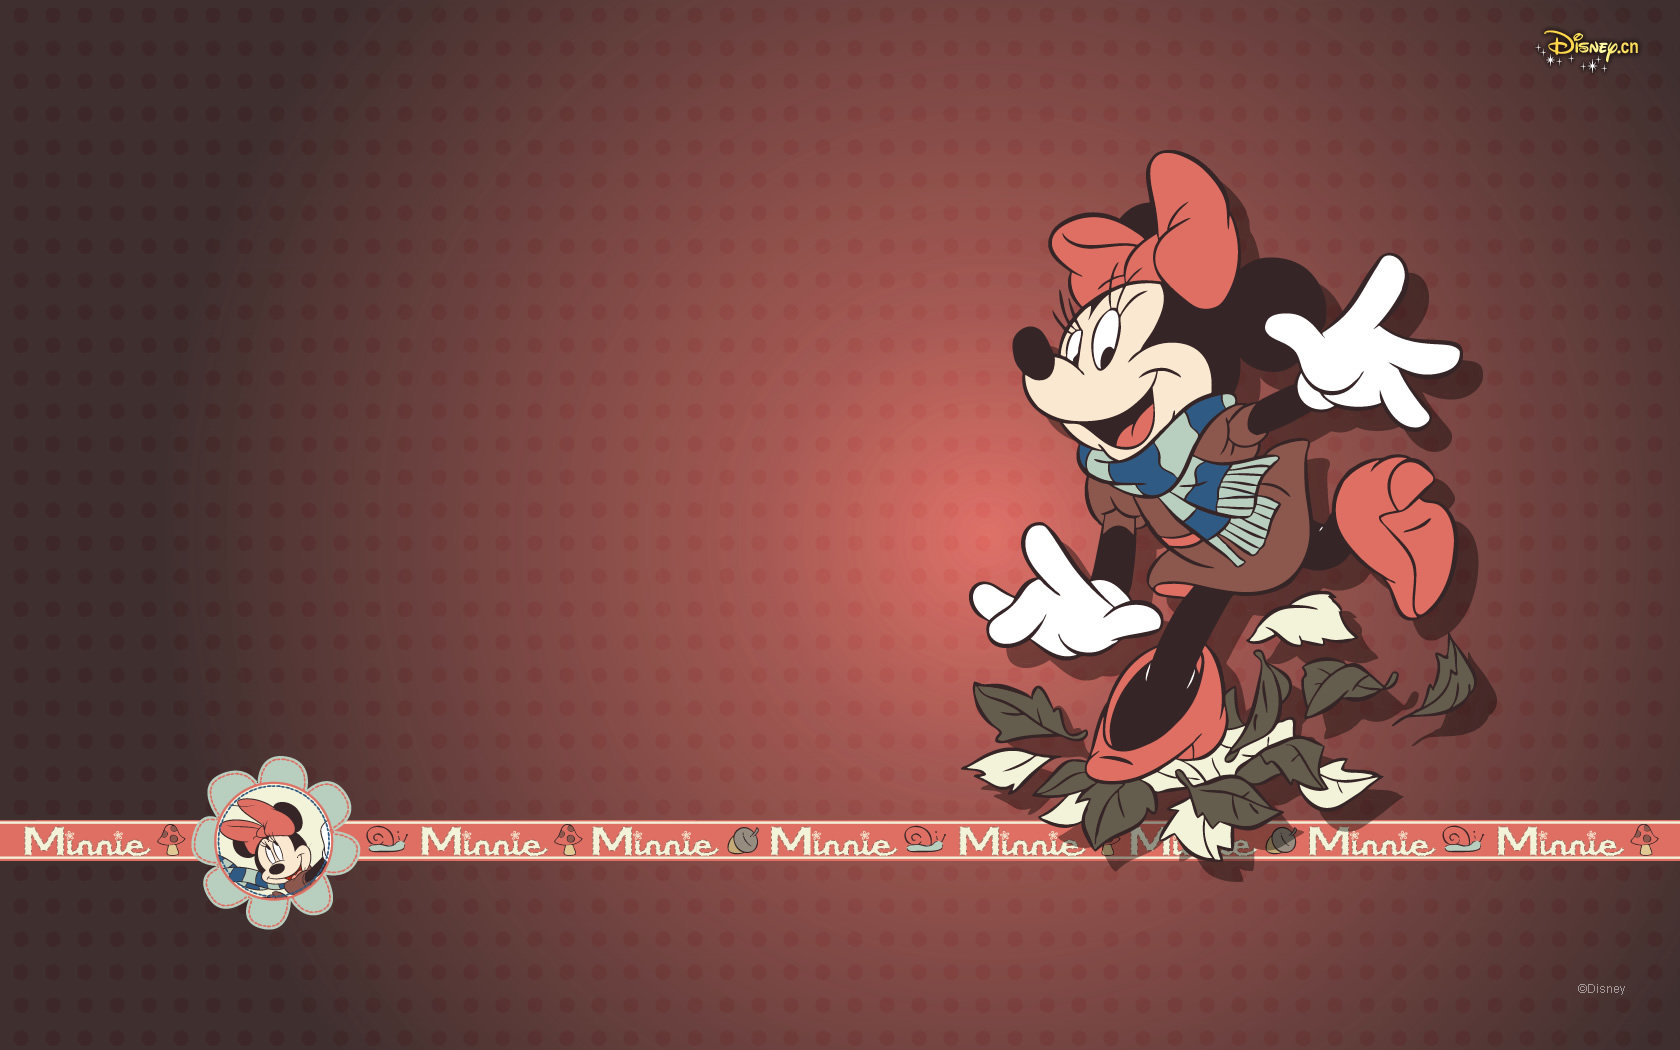 Minnie Mouse wallpapers 1680x1050 desktop backgrounds